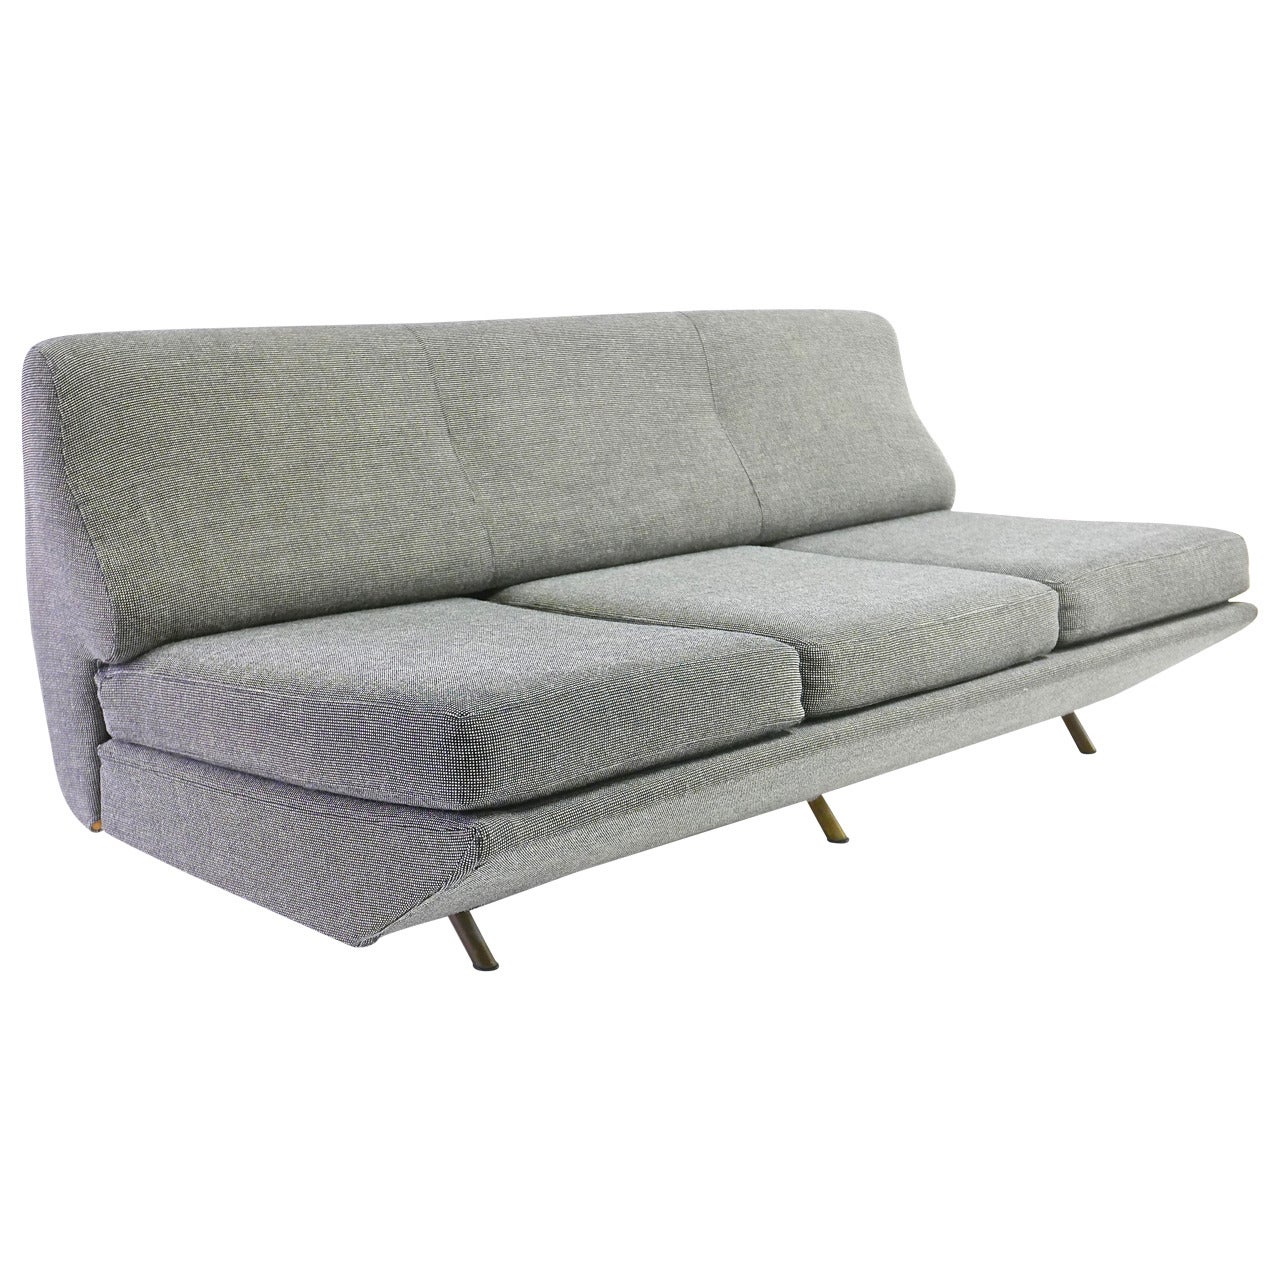 Marco Zanuso "Sleep-O-Matic" Sofa for Arflex